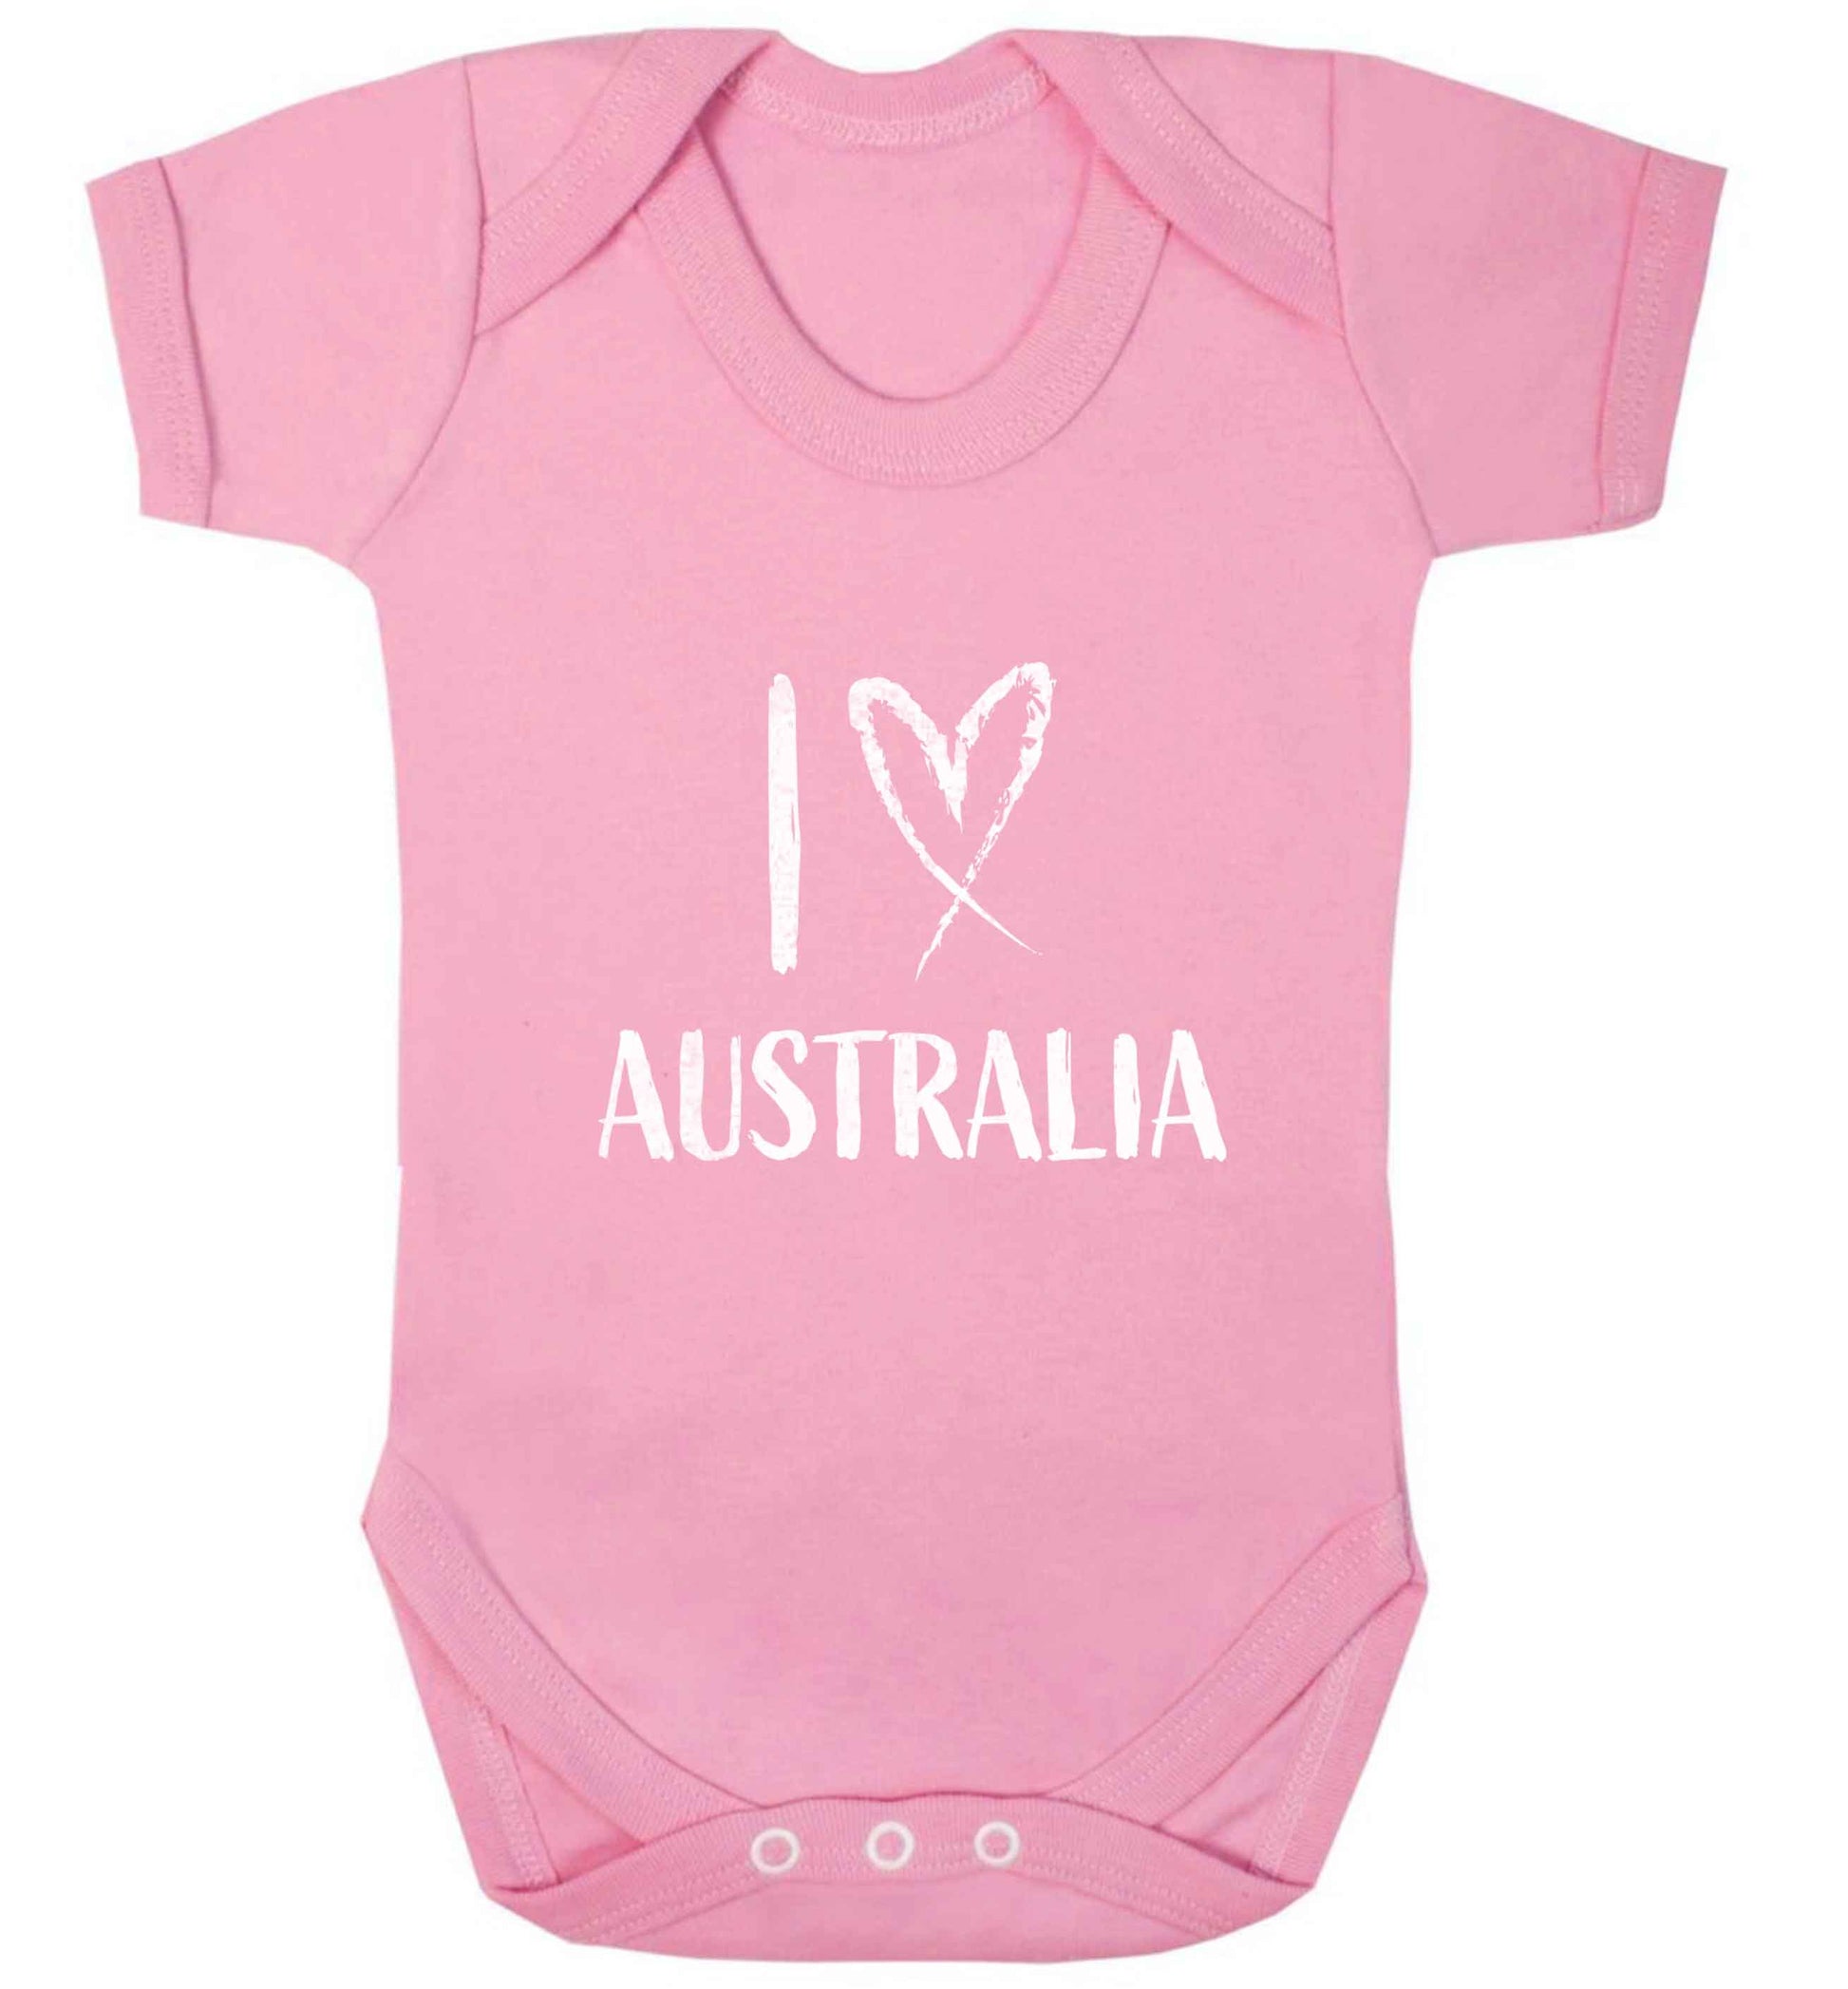 I Love Australia baby vest pale pink 18-24 months